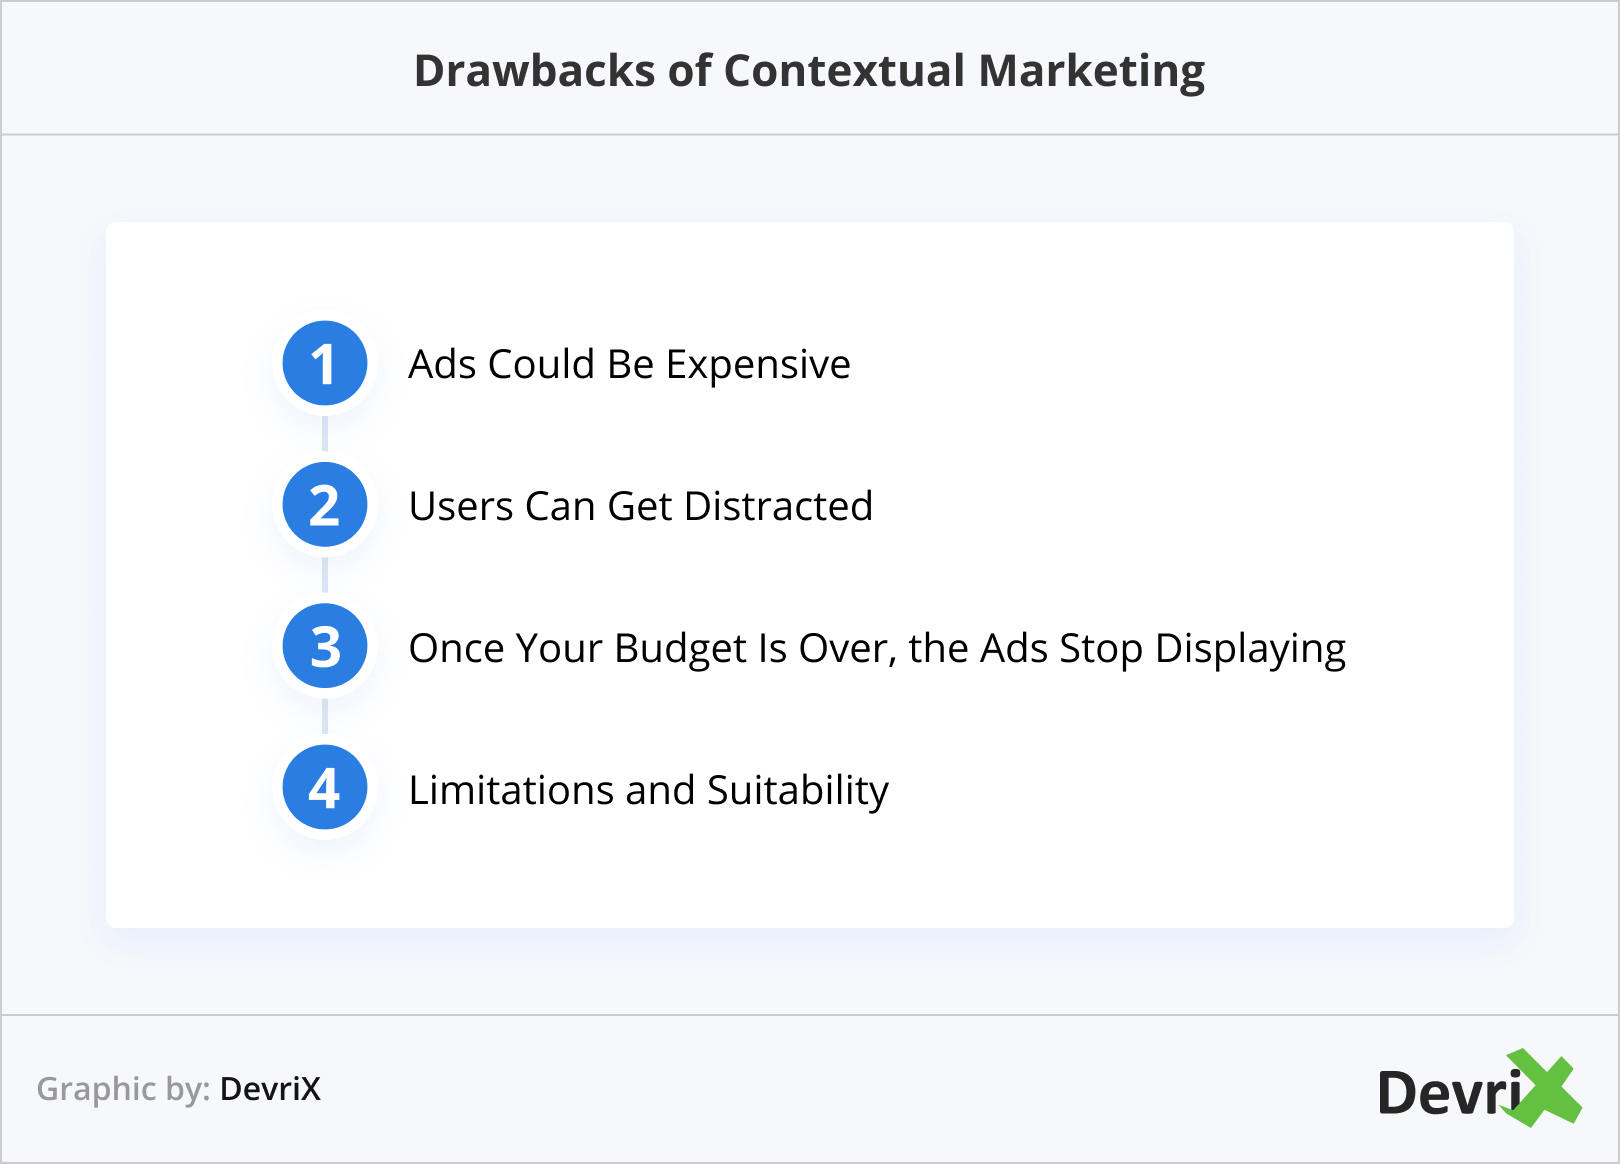 Drawbacks of Contextual Marketing